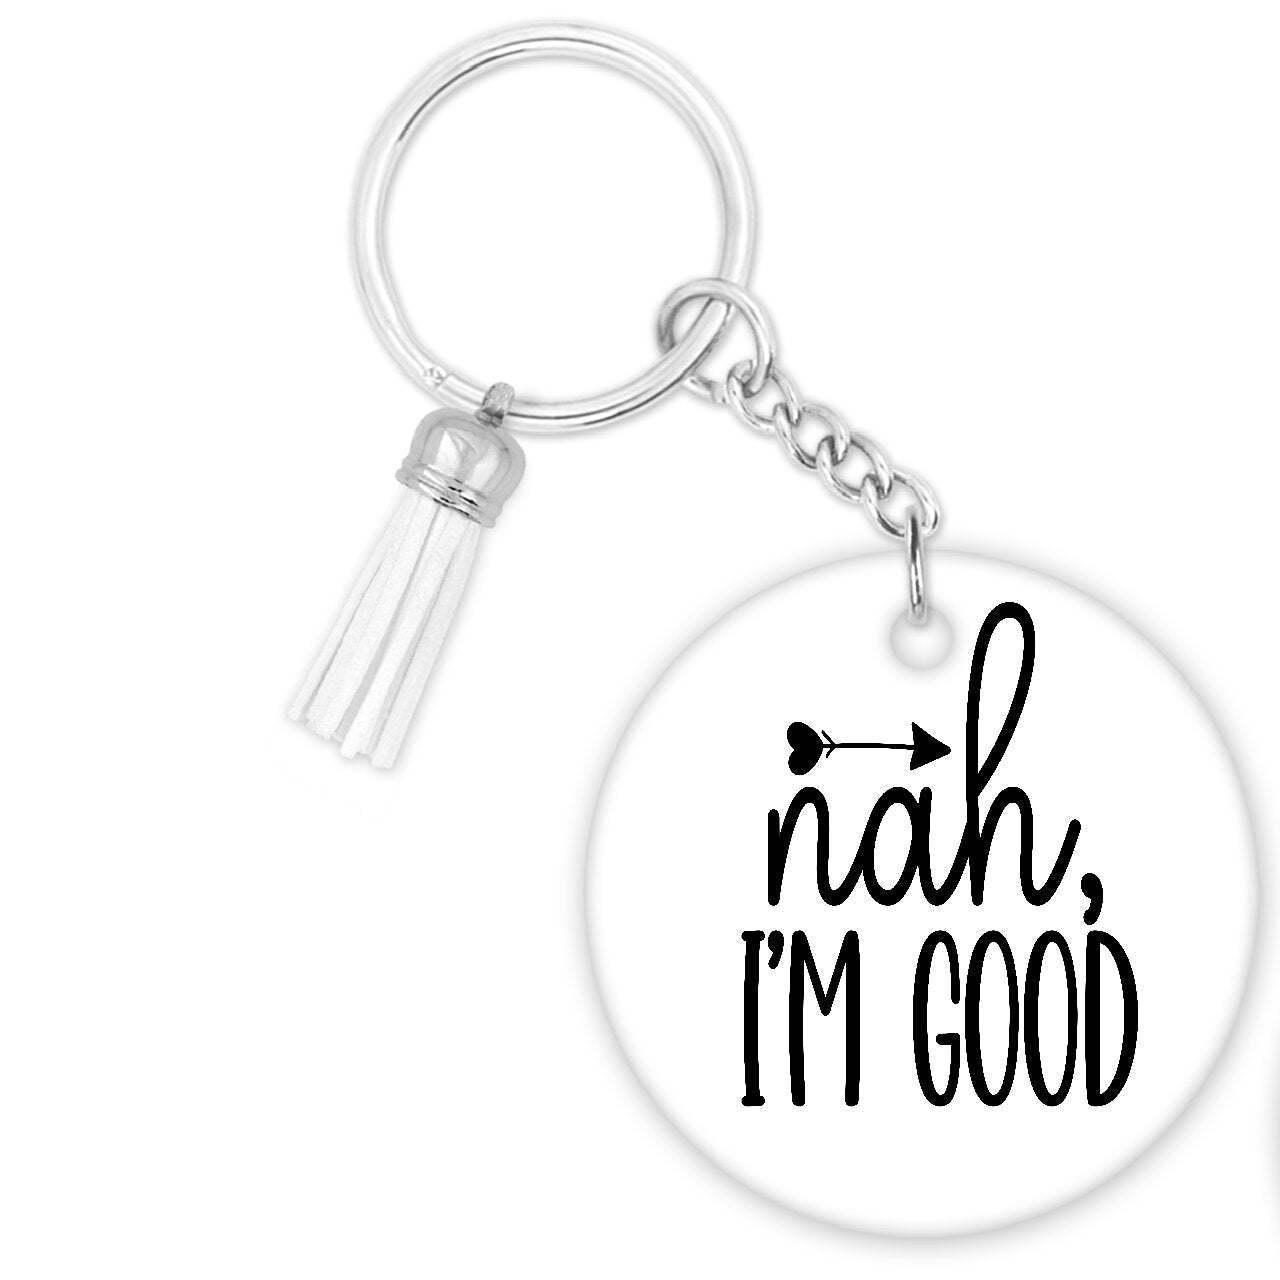 Nah, I'm Good - Keychain